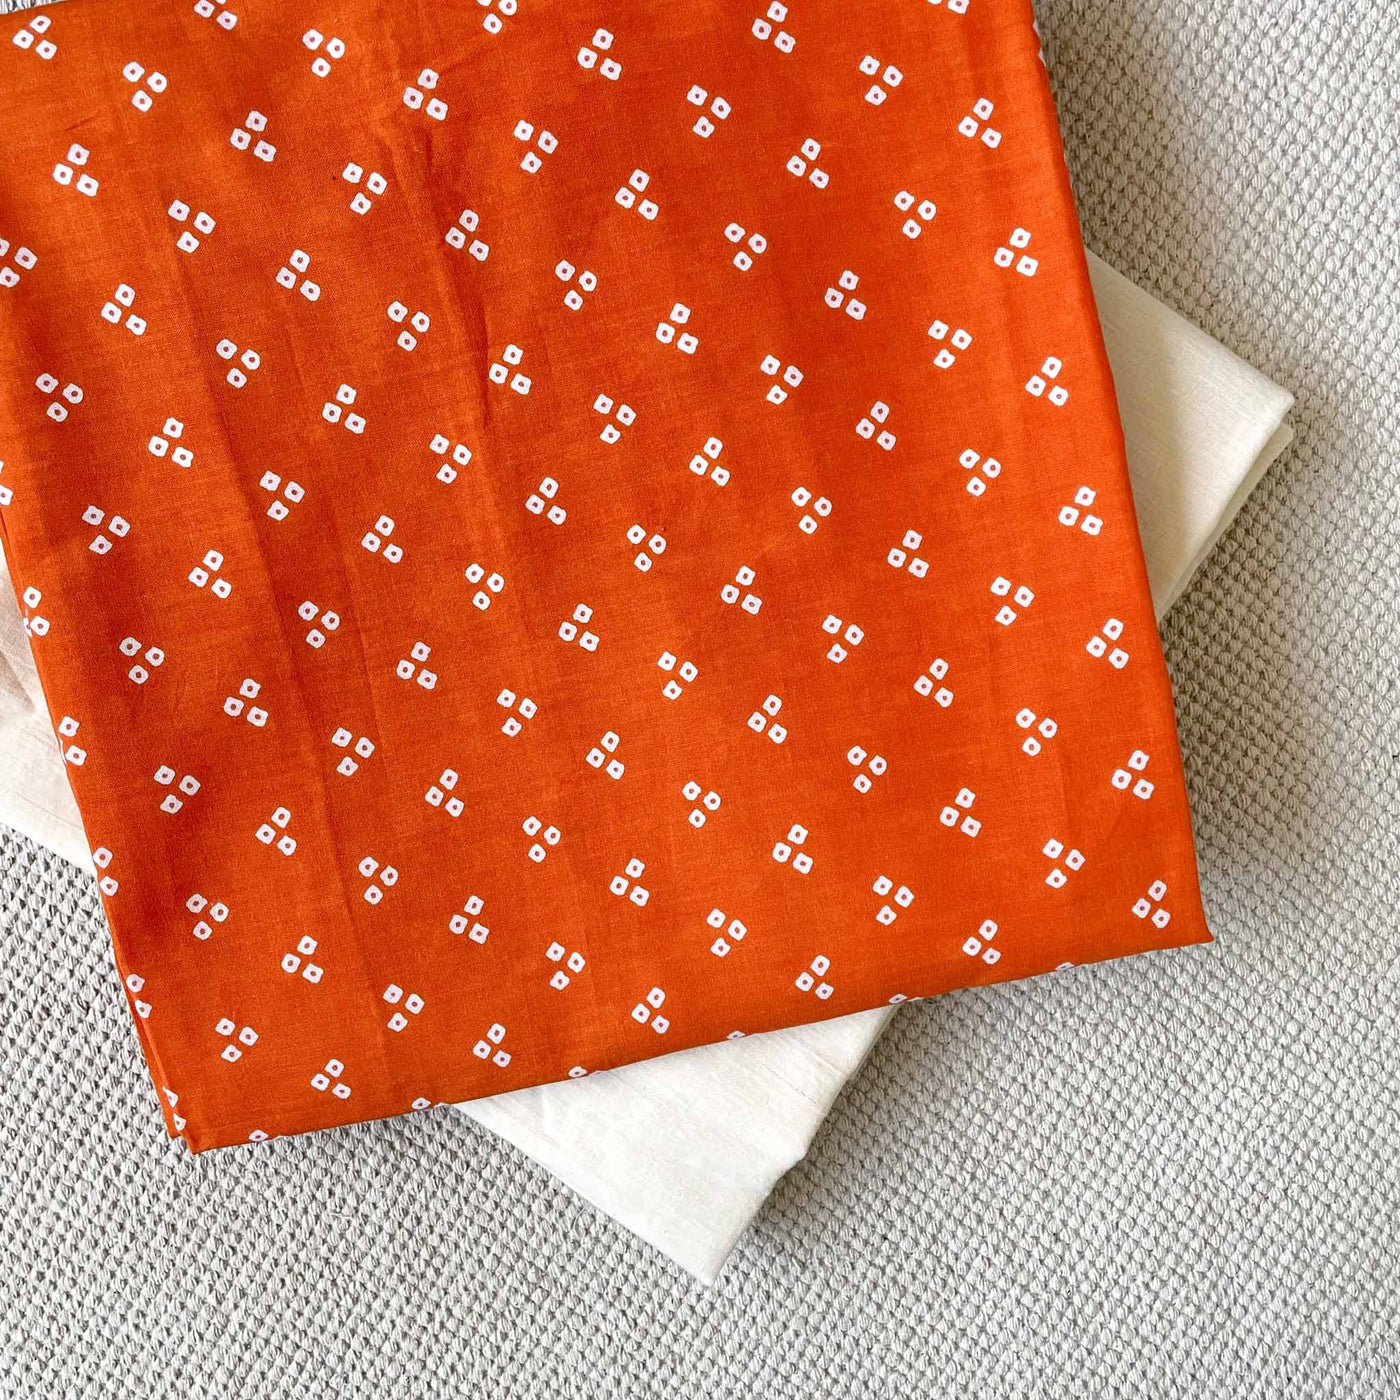 Fabric Pandit Kurta Set Unisex Orange And White Triple Dots Bandhani Pattern | Hand Block Printed Pure Cotton Kurta Fabric (2.5 Meters) | and Cotton Pyjama (2.5 Meters) | Unstitched Combo Set